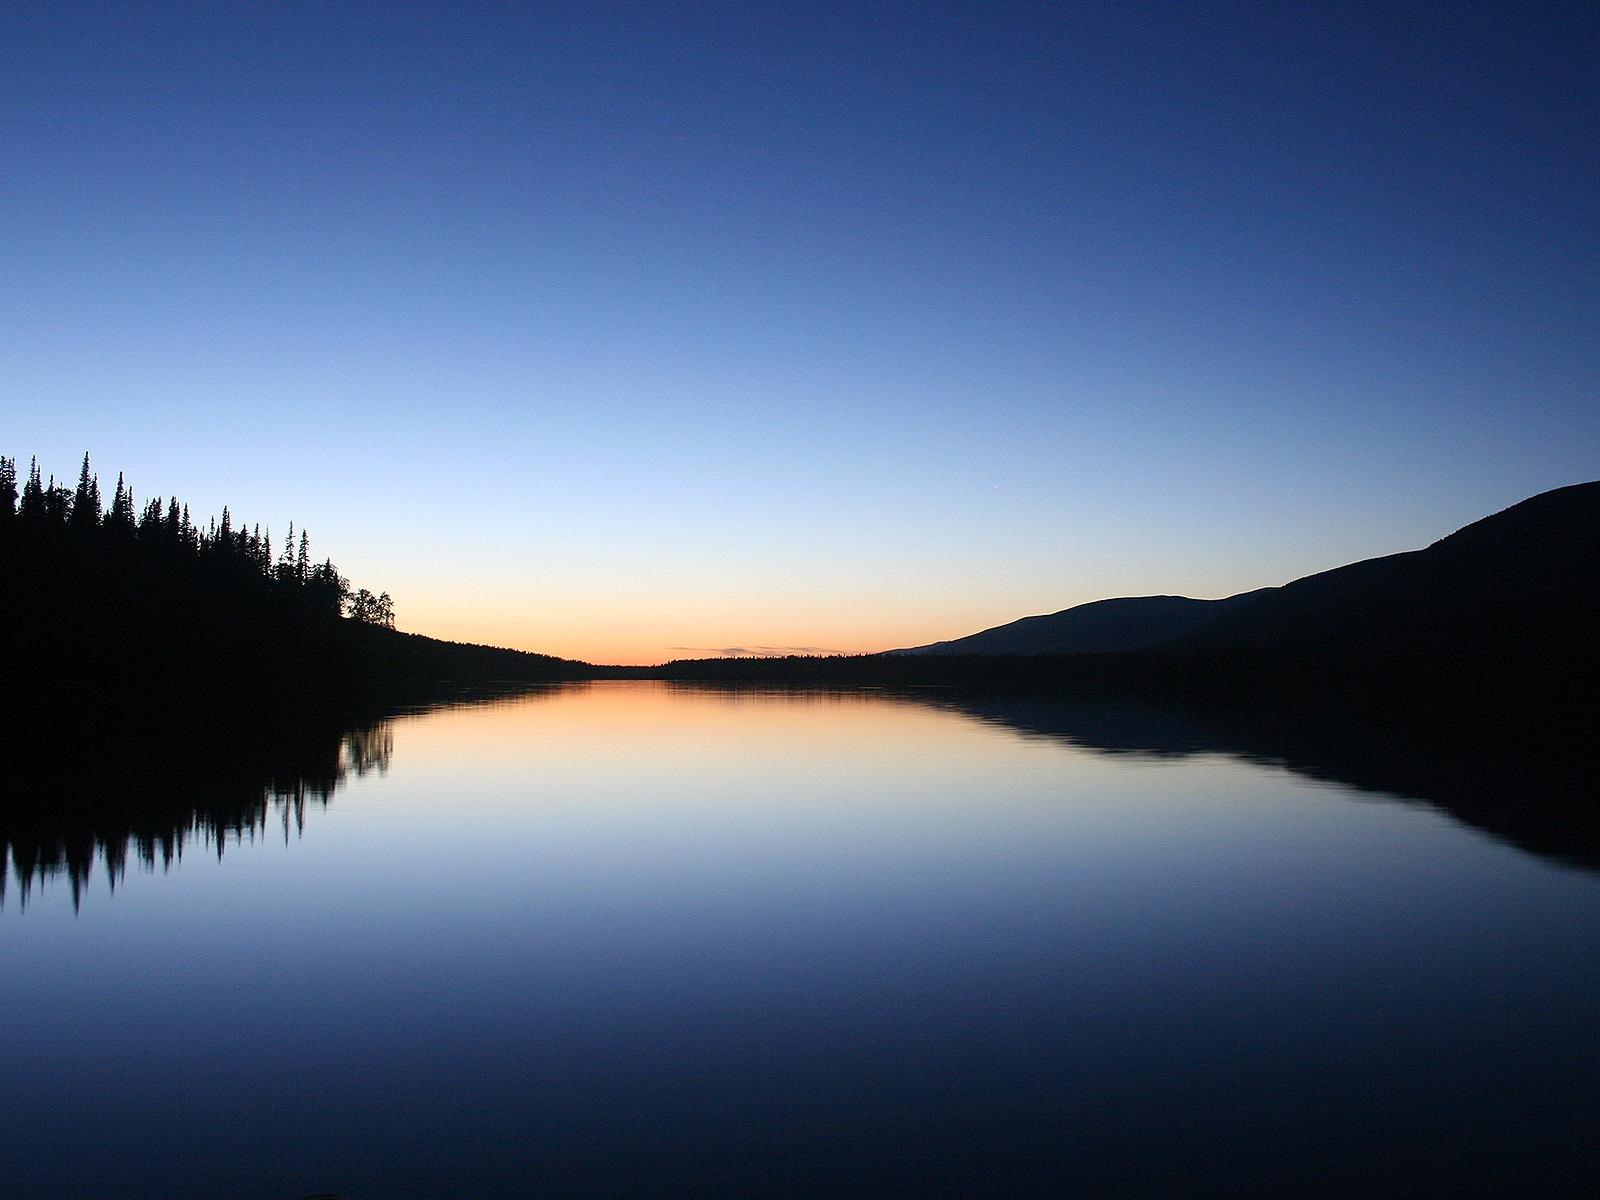 Lake At Night HD Wallpaper, Background Image